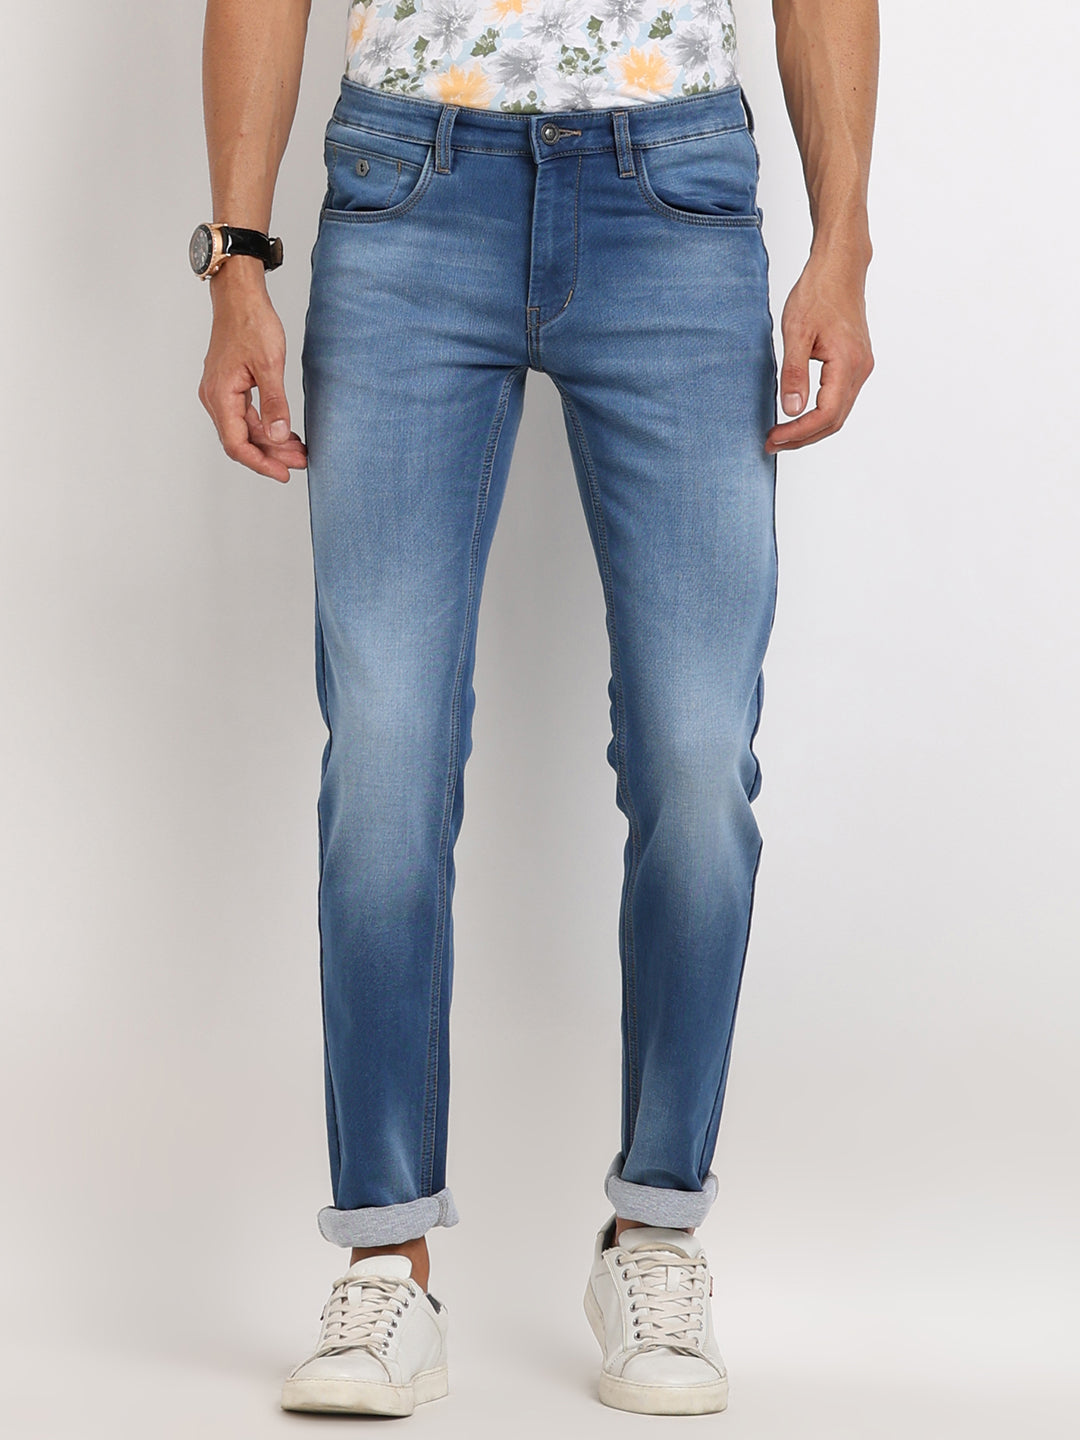 Cotton Stretch Sky Blue Plain Narrow Fit Flat Front Casual Jeans